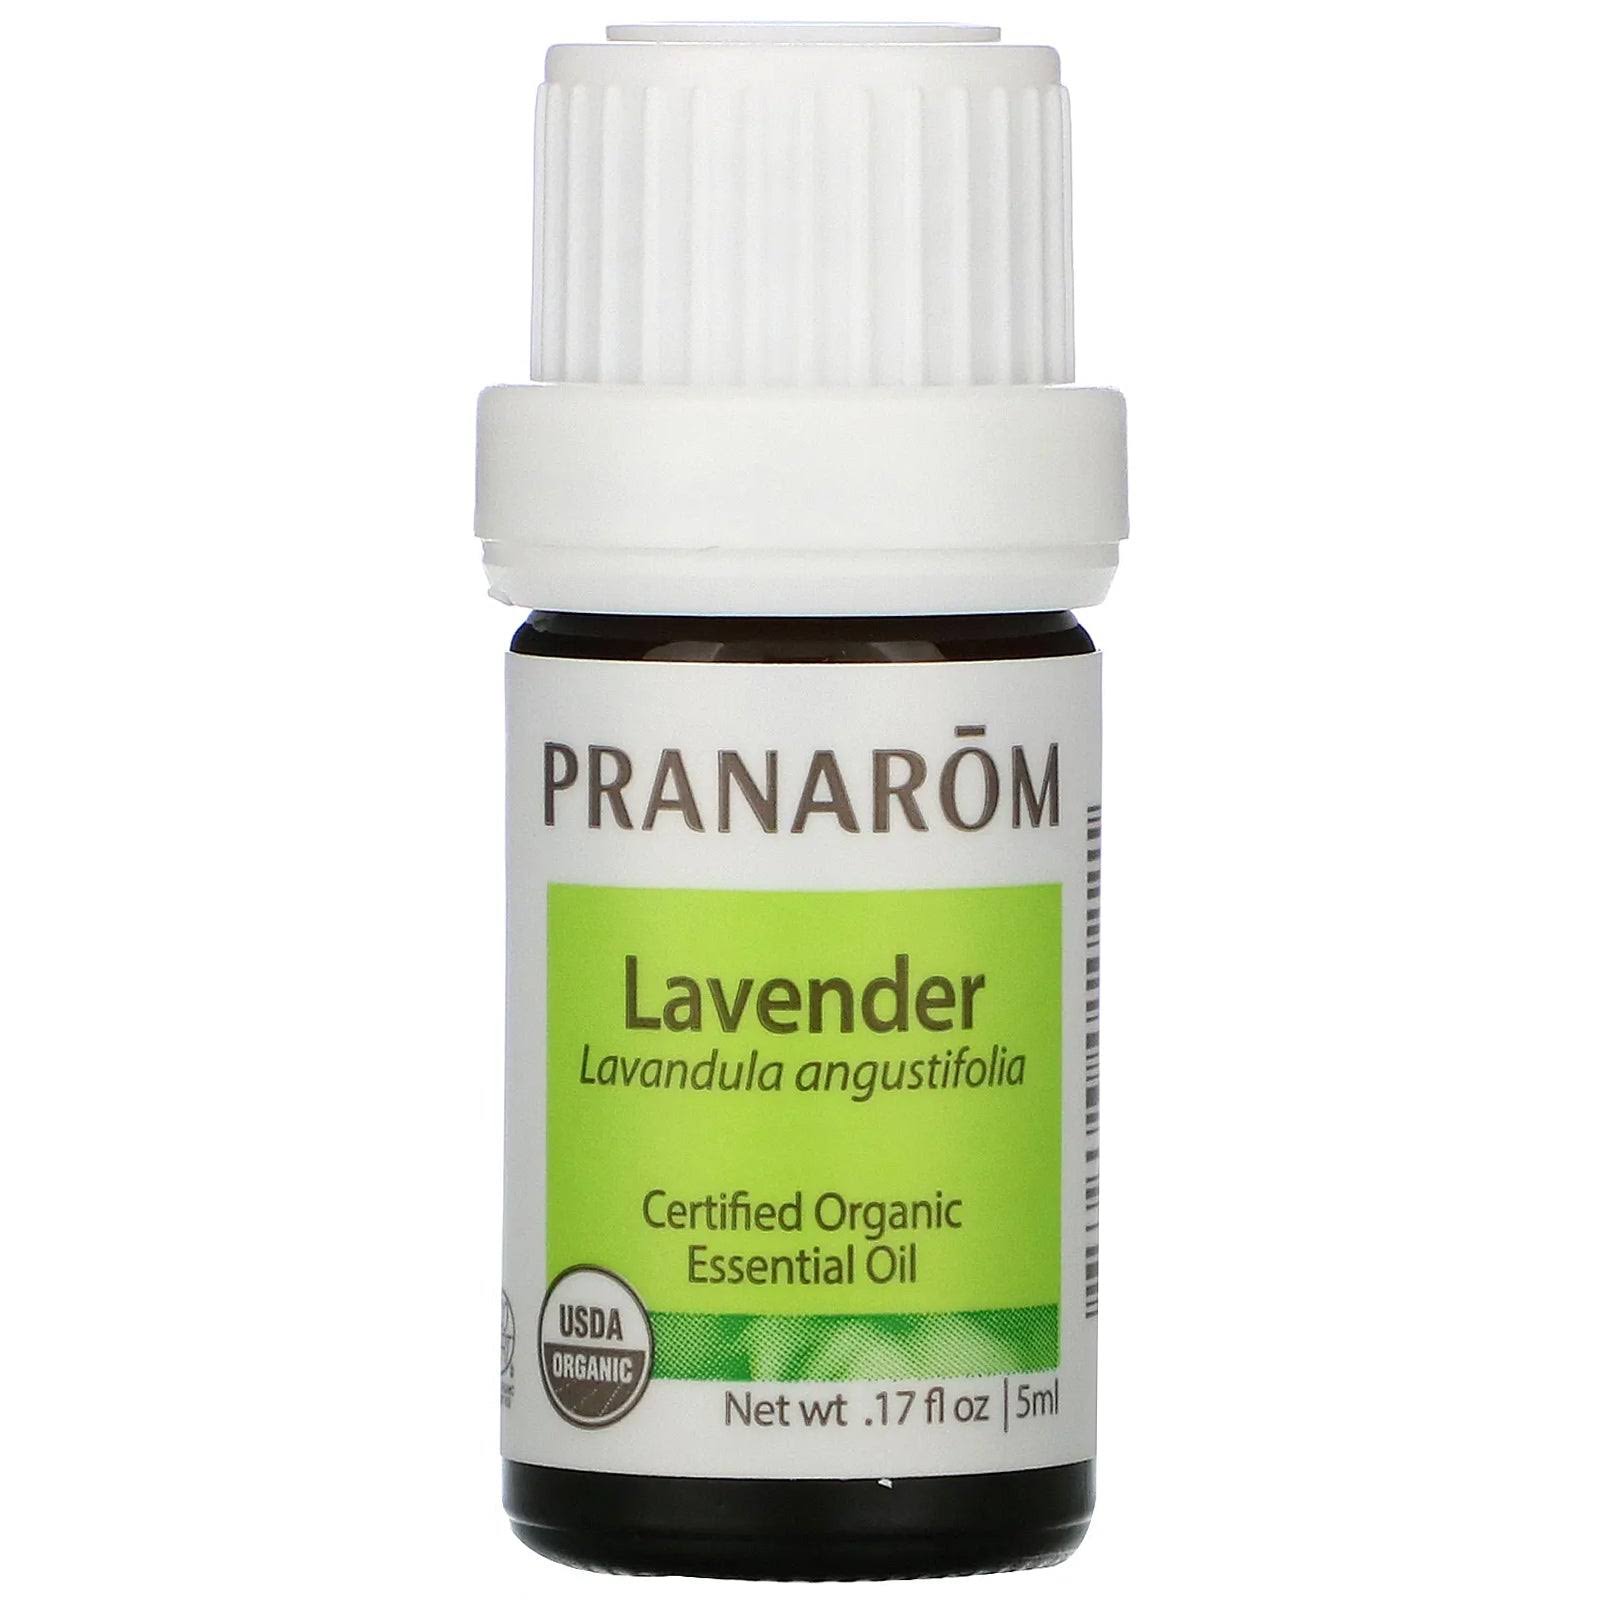 Pranarom Essential Oil - Lavender, 5ml